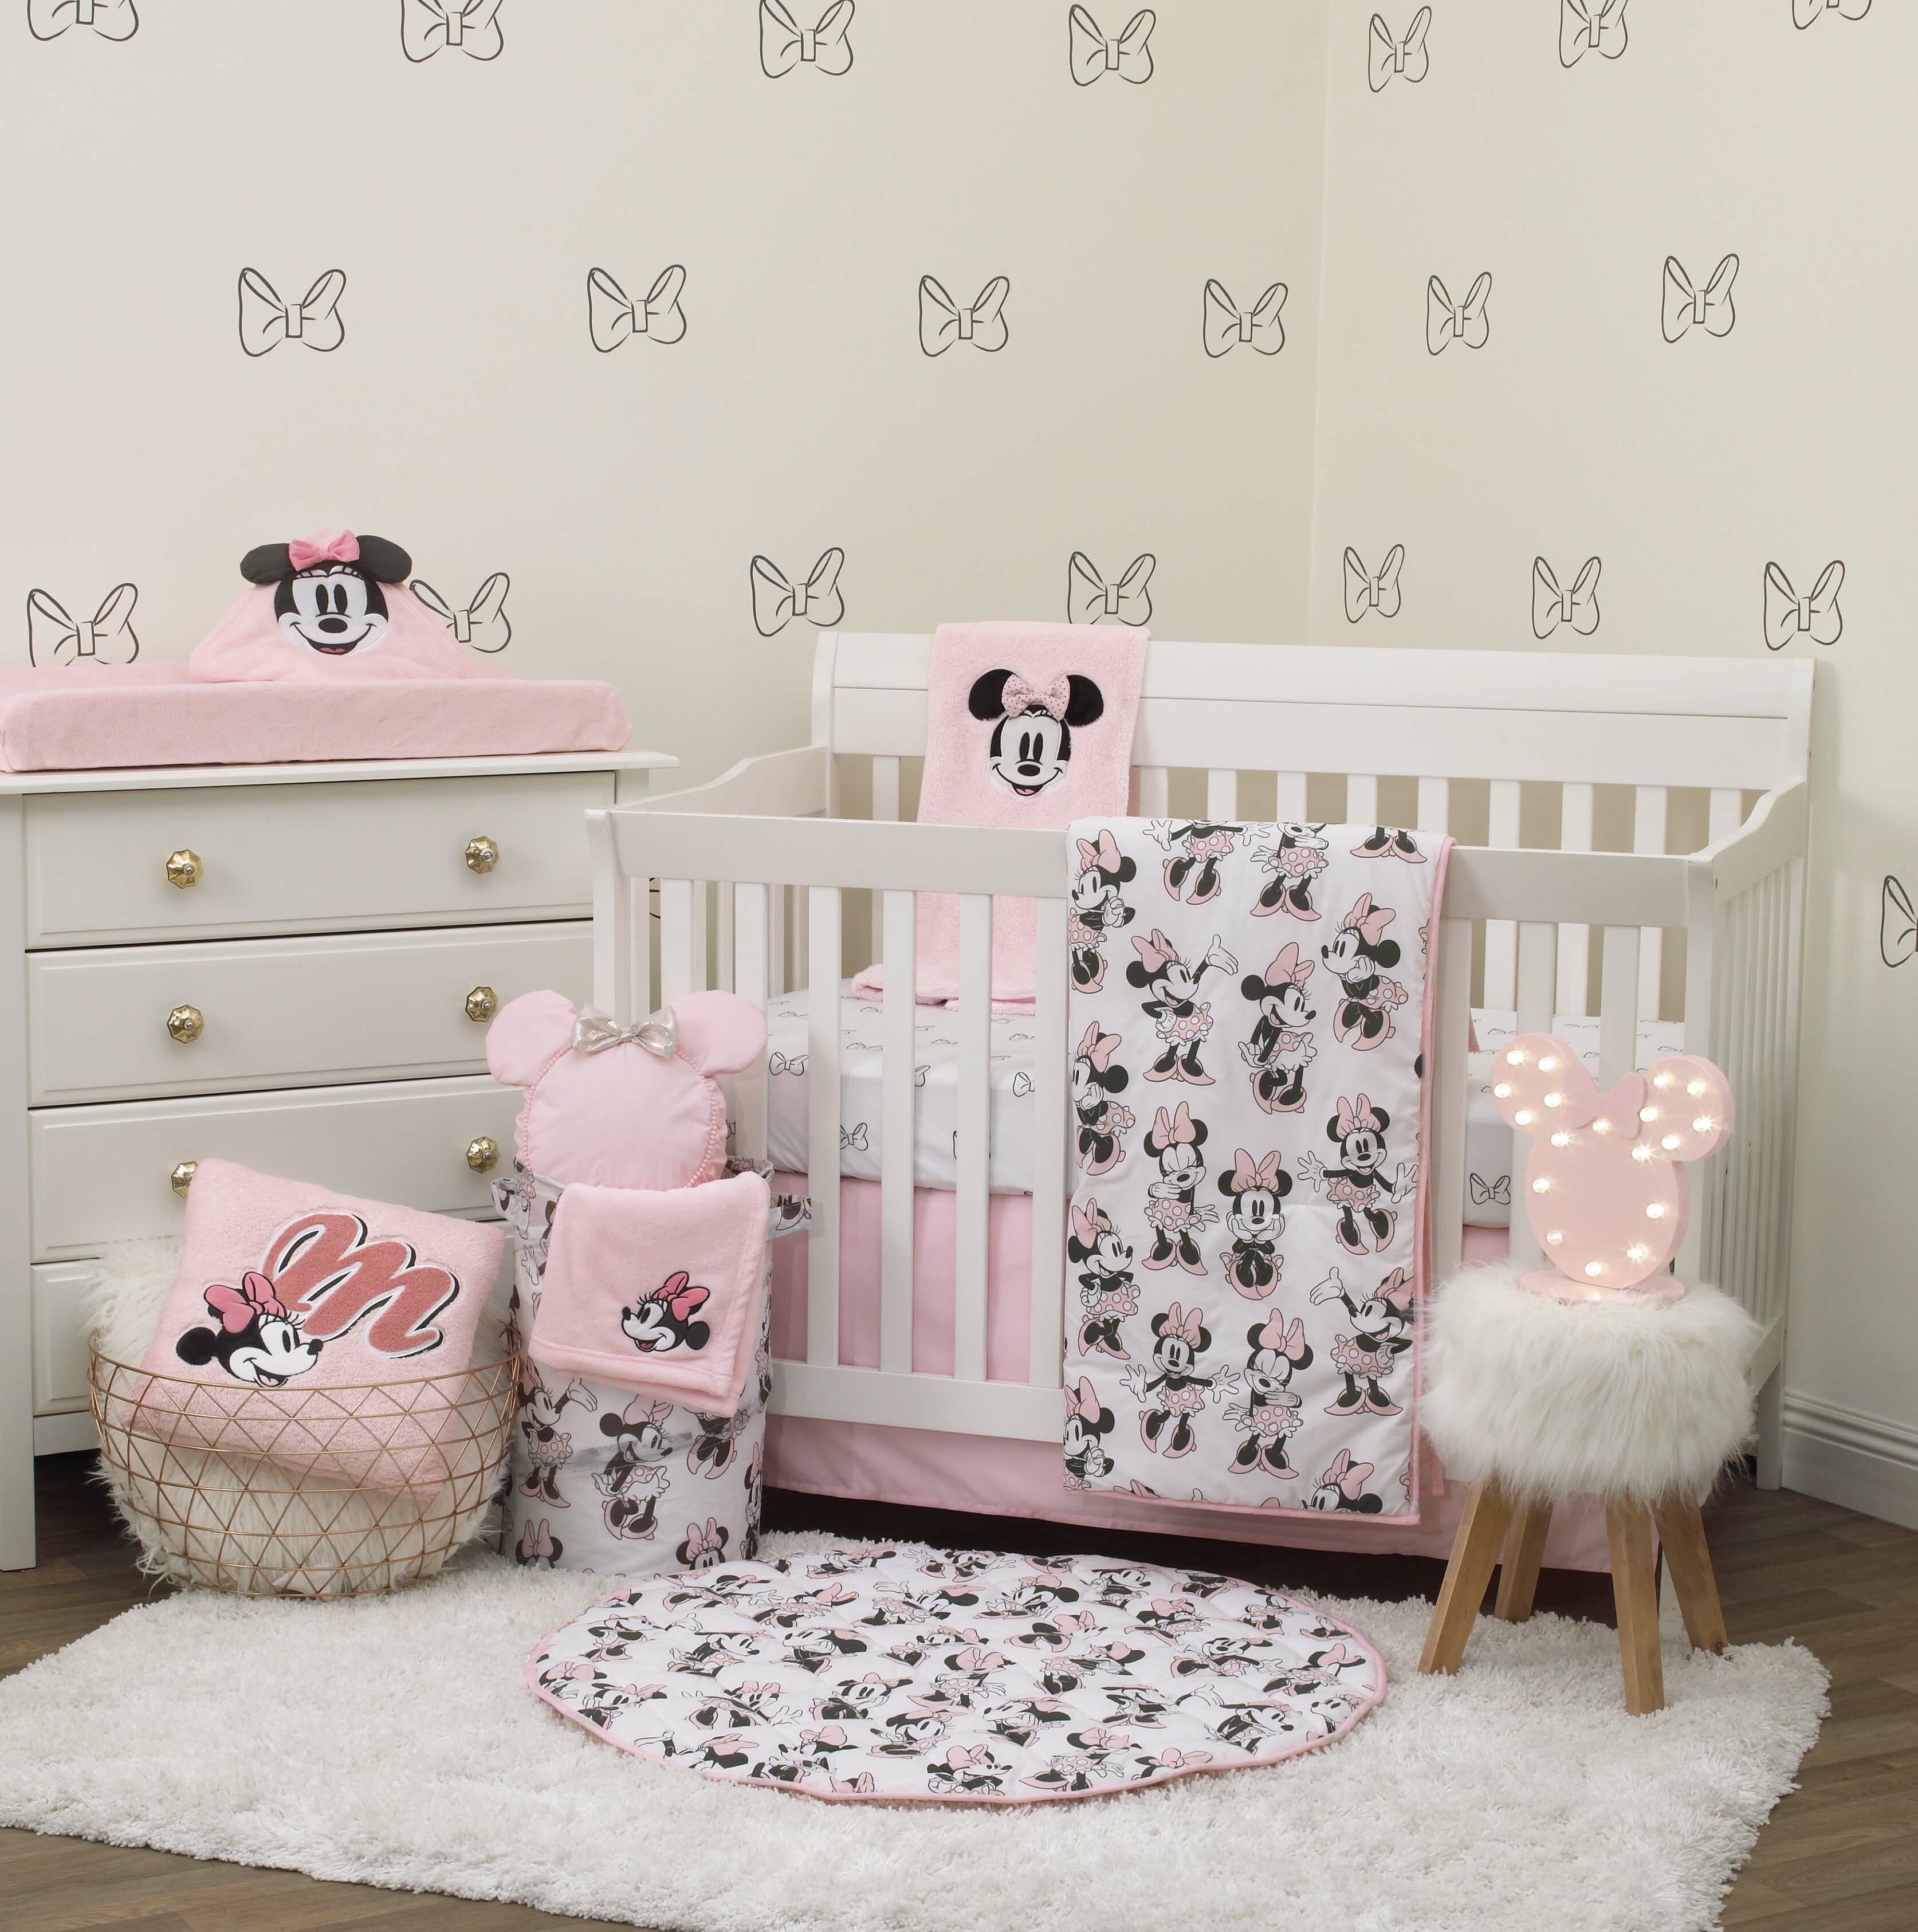 Disney Minnie Mouse Nursery 6 Piece Crib Bedding Set Reviews